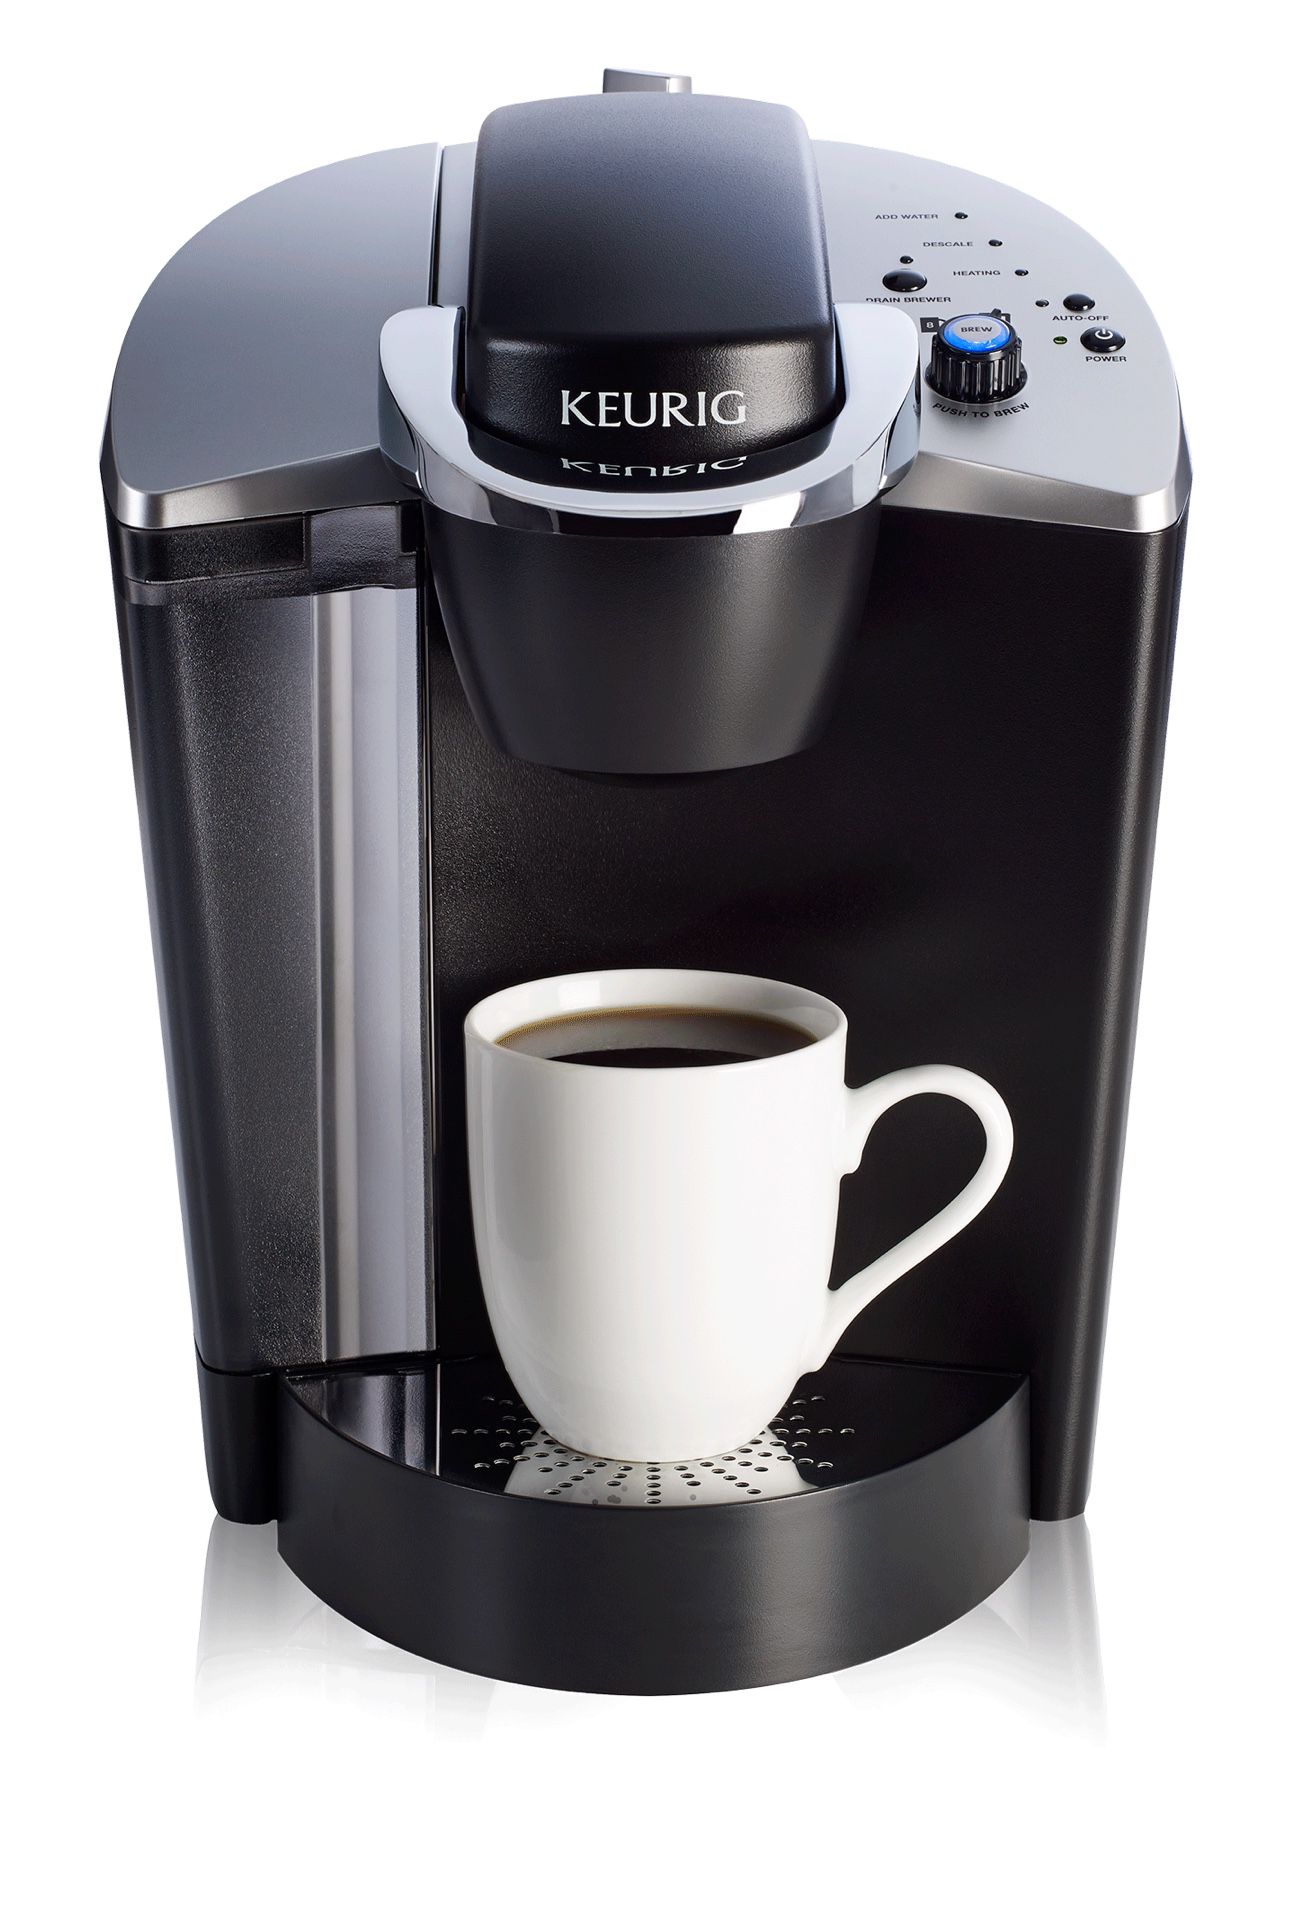 Keurig K140 Commercial Coffee Maker Brewing System